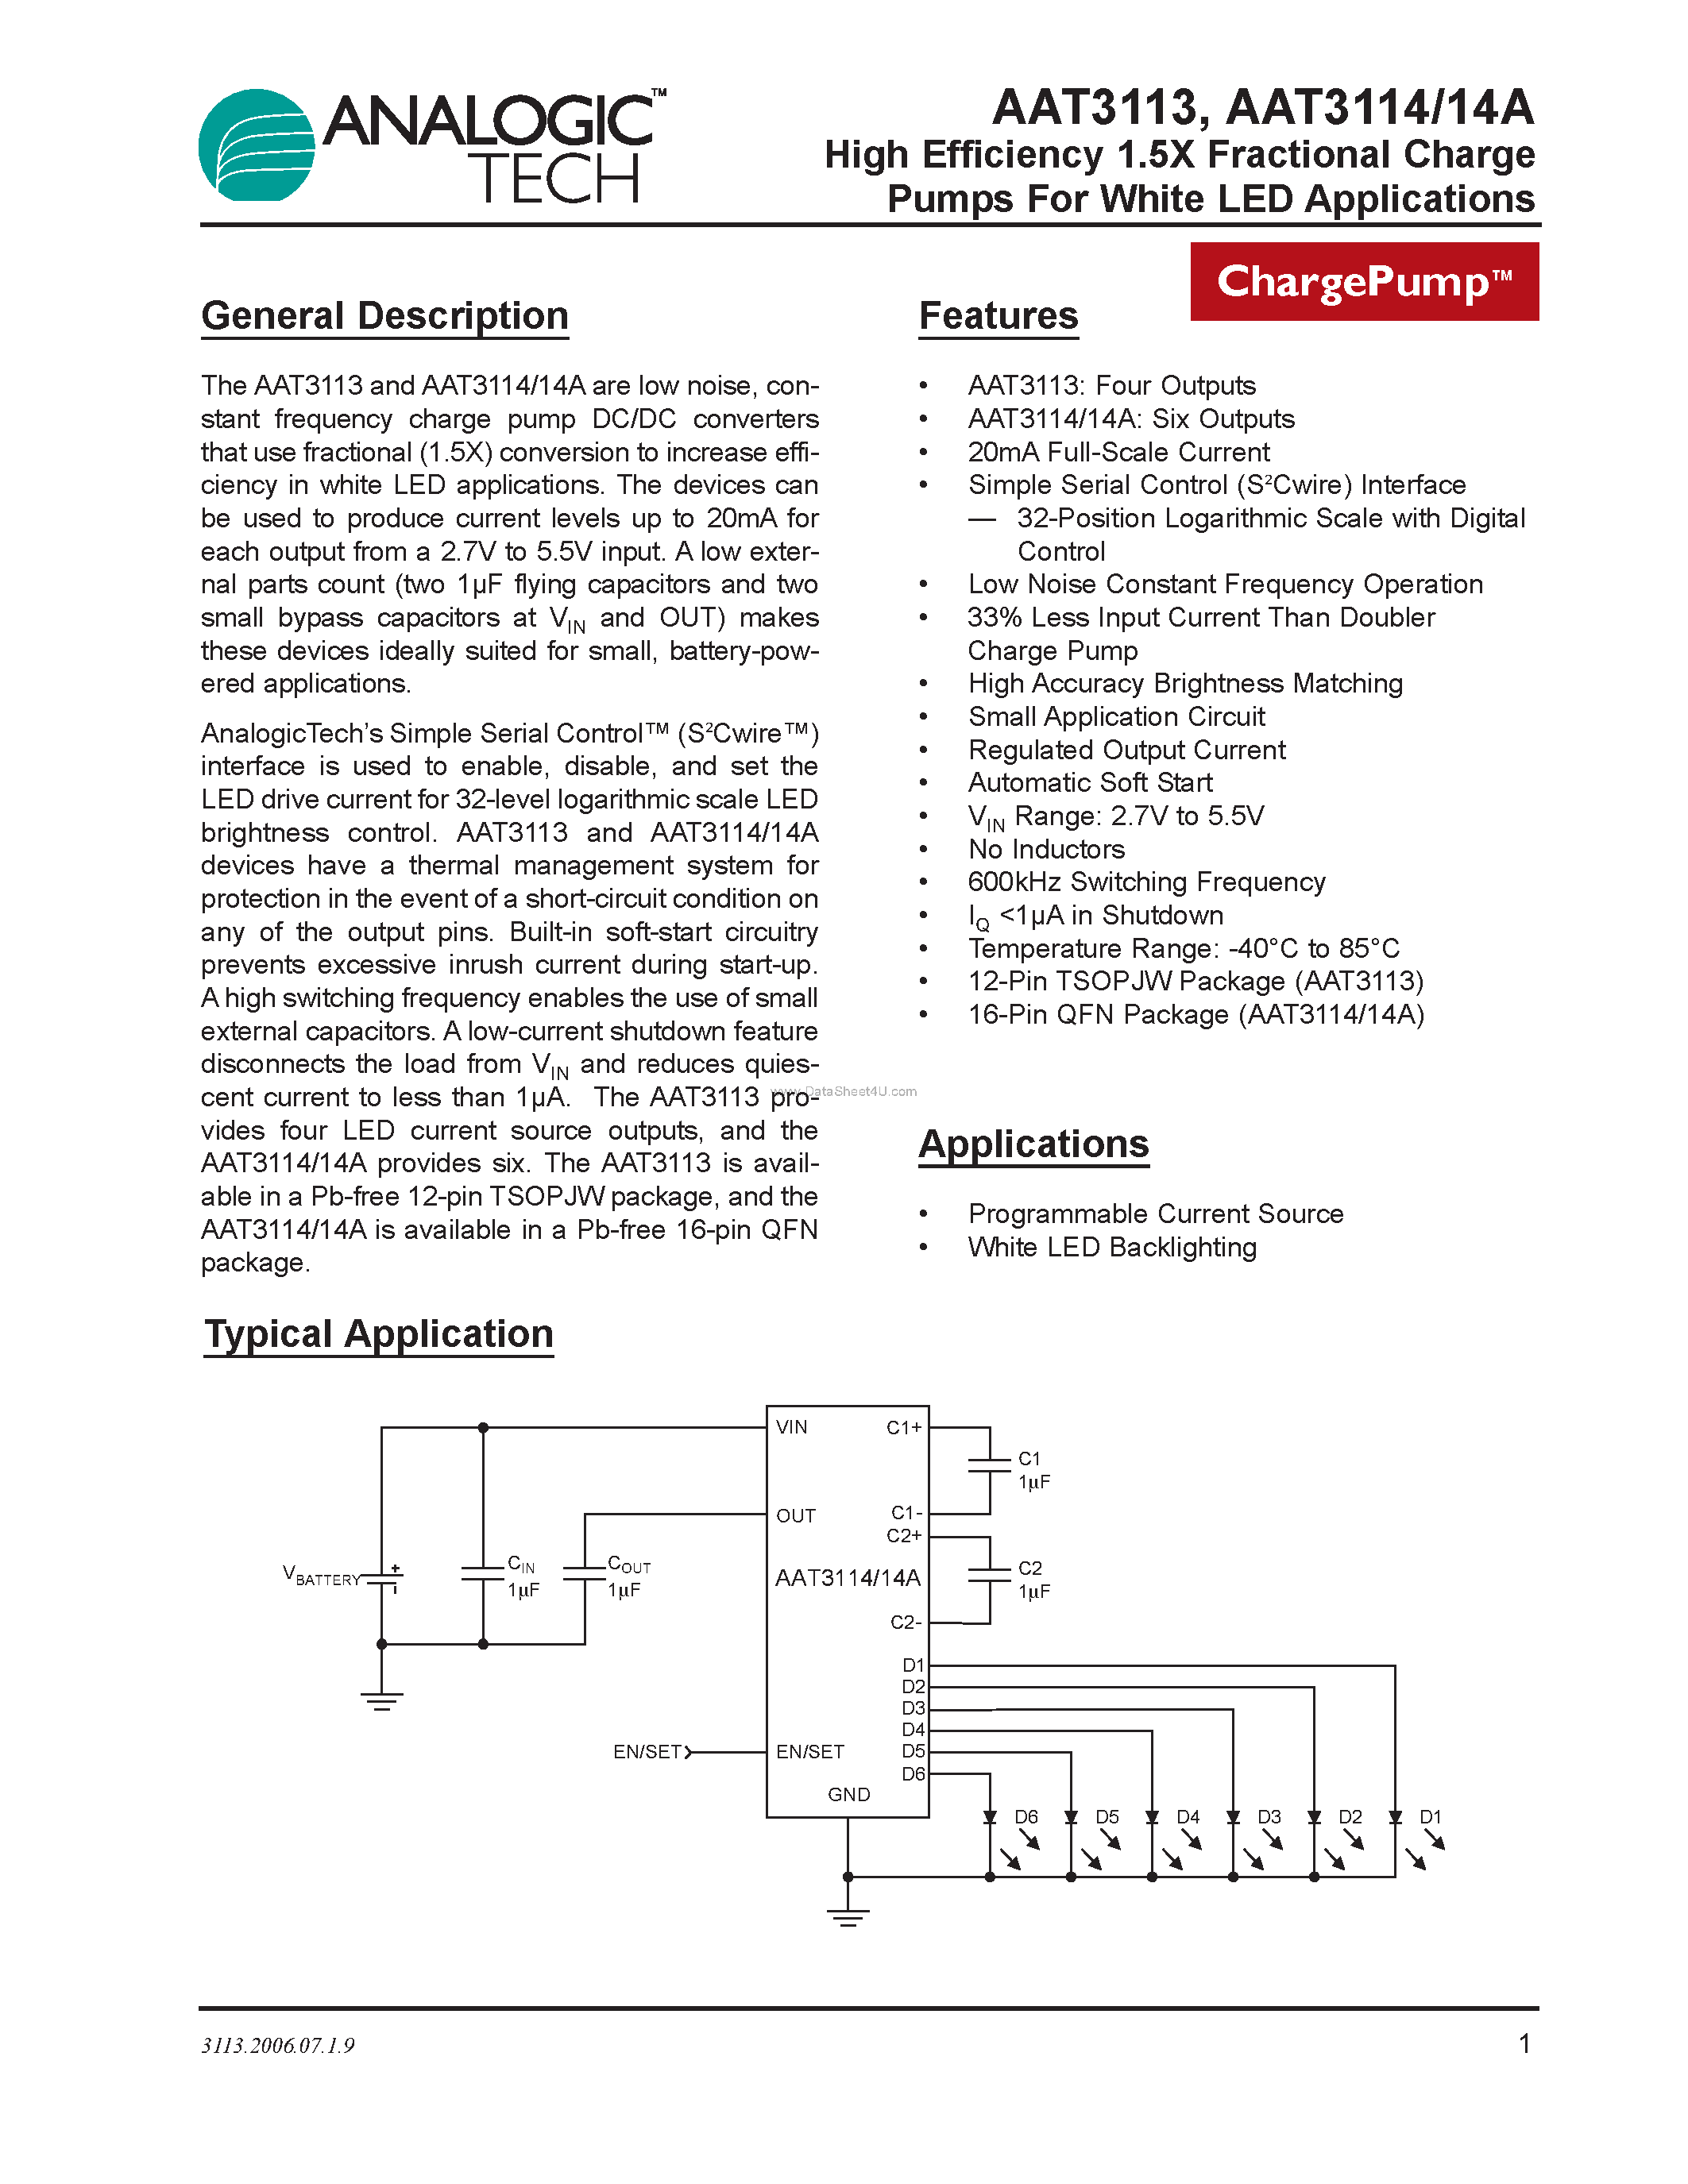 Даташит AAT3114 - High Efficiency 1.5X Fractional Charge Pumps страница 1